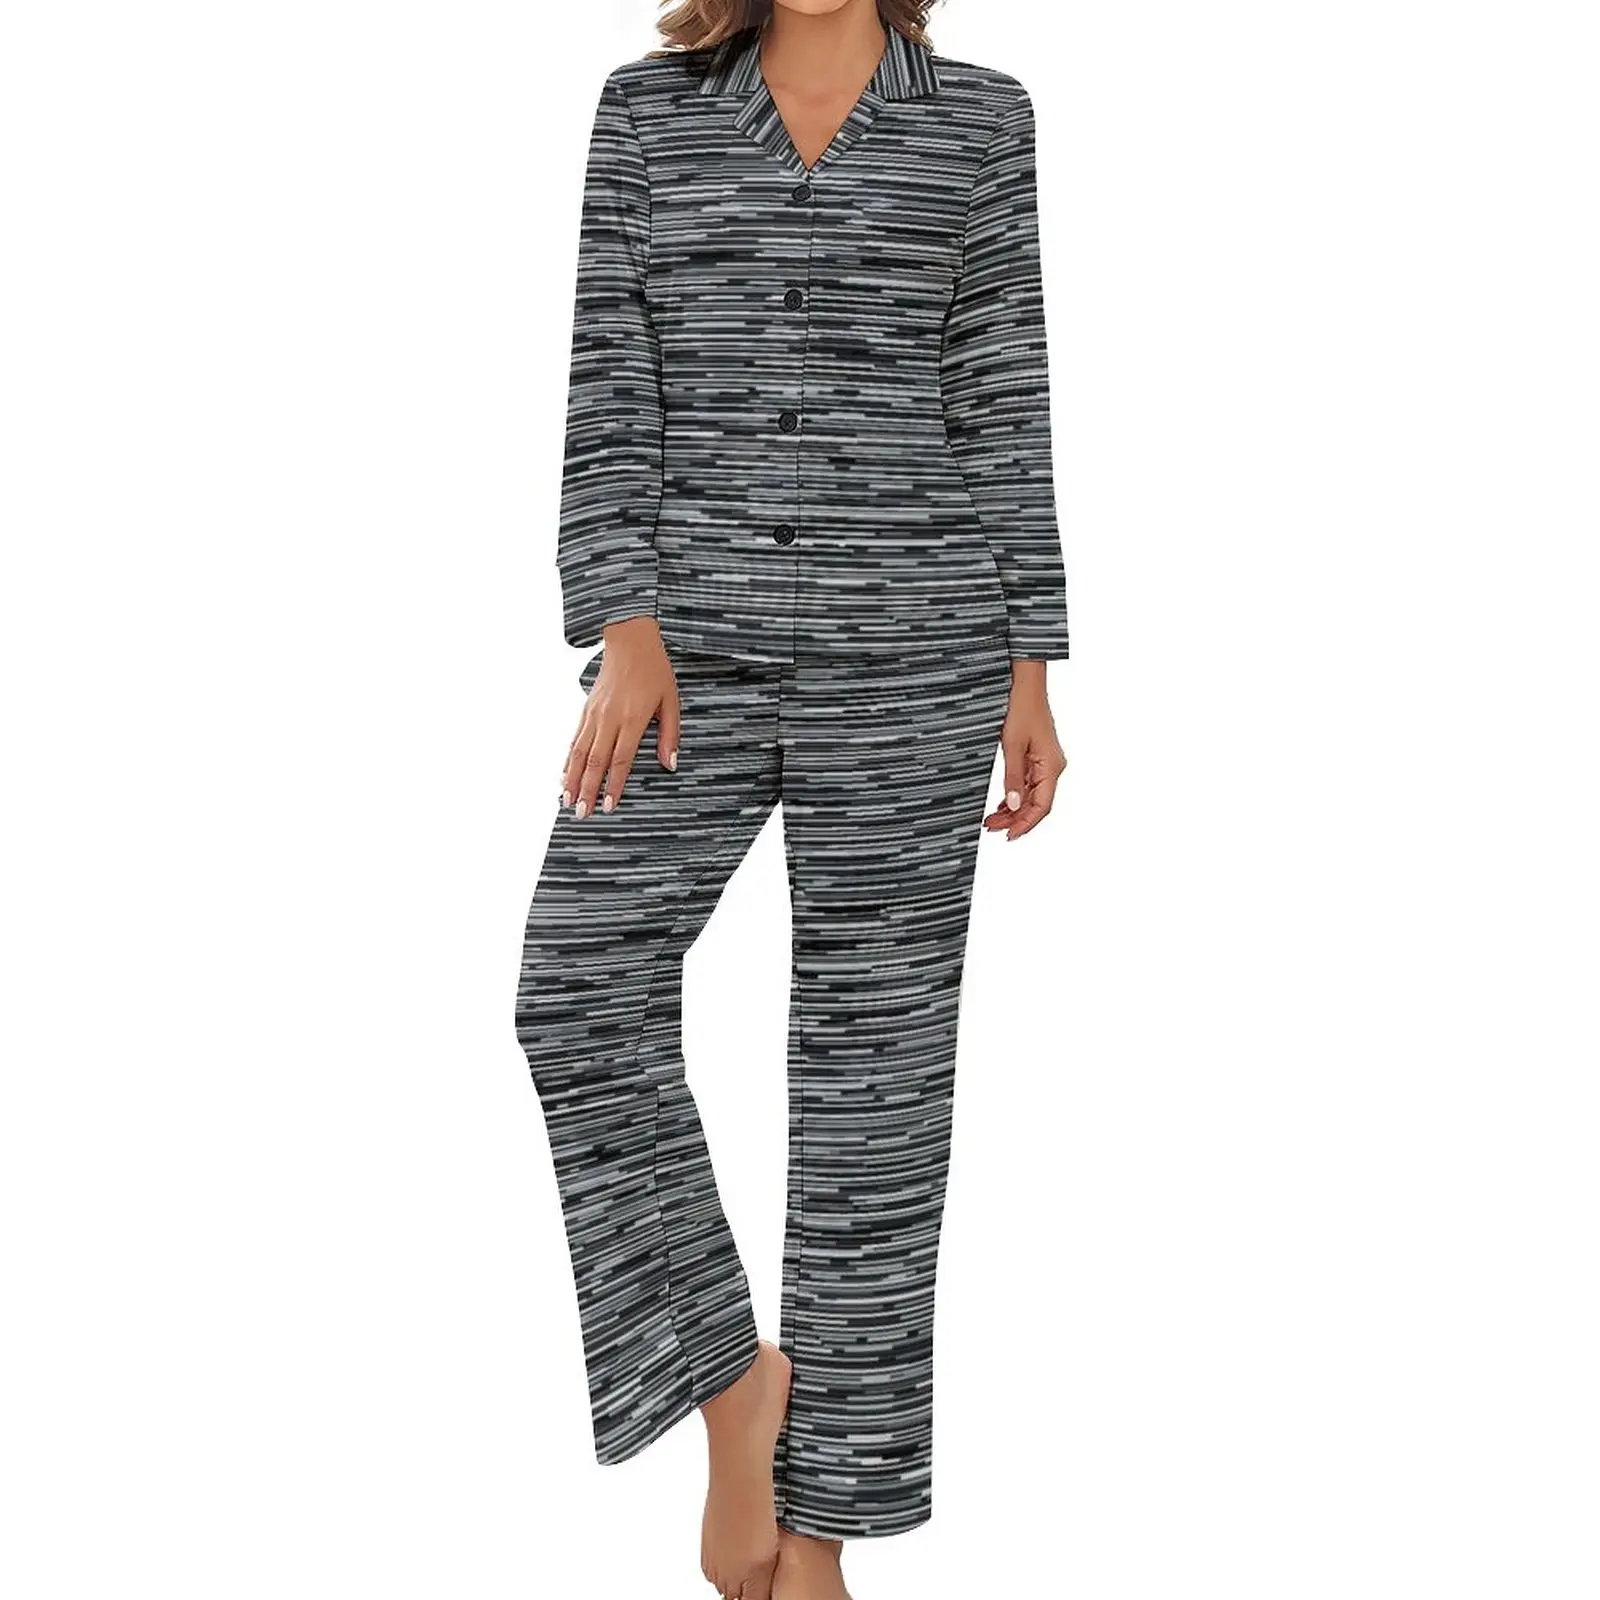 

Lines Print Pajamas Black and White Long-Sleeve Soft Pajama Sets Two Piece Home Spring Graphic Nightwear Birthday Present